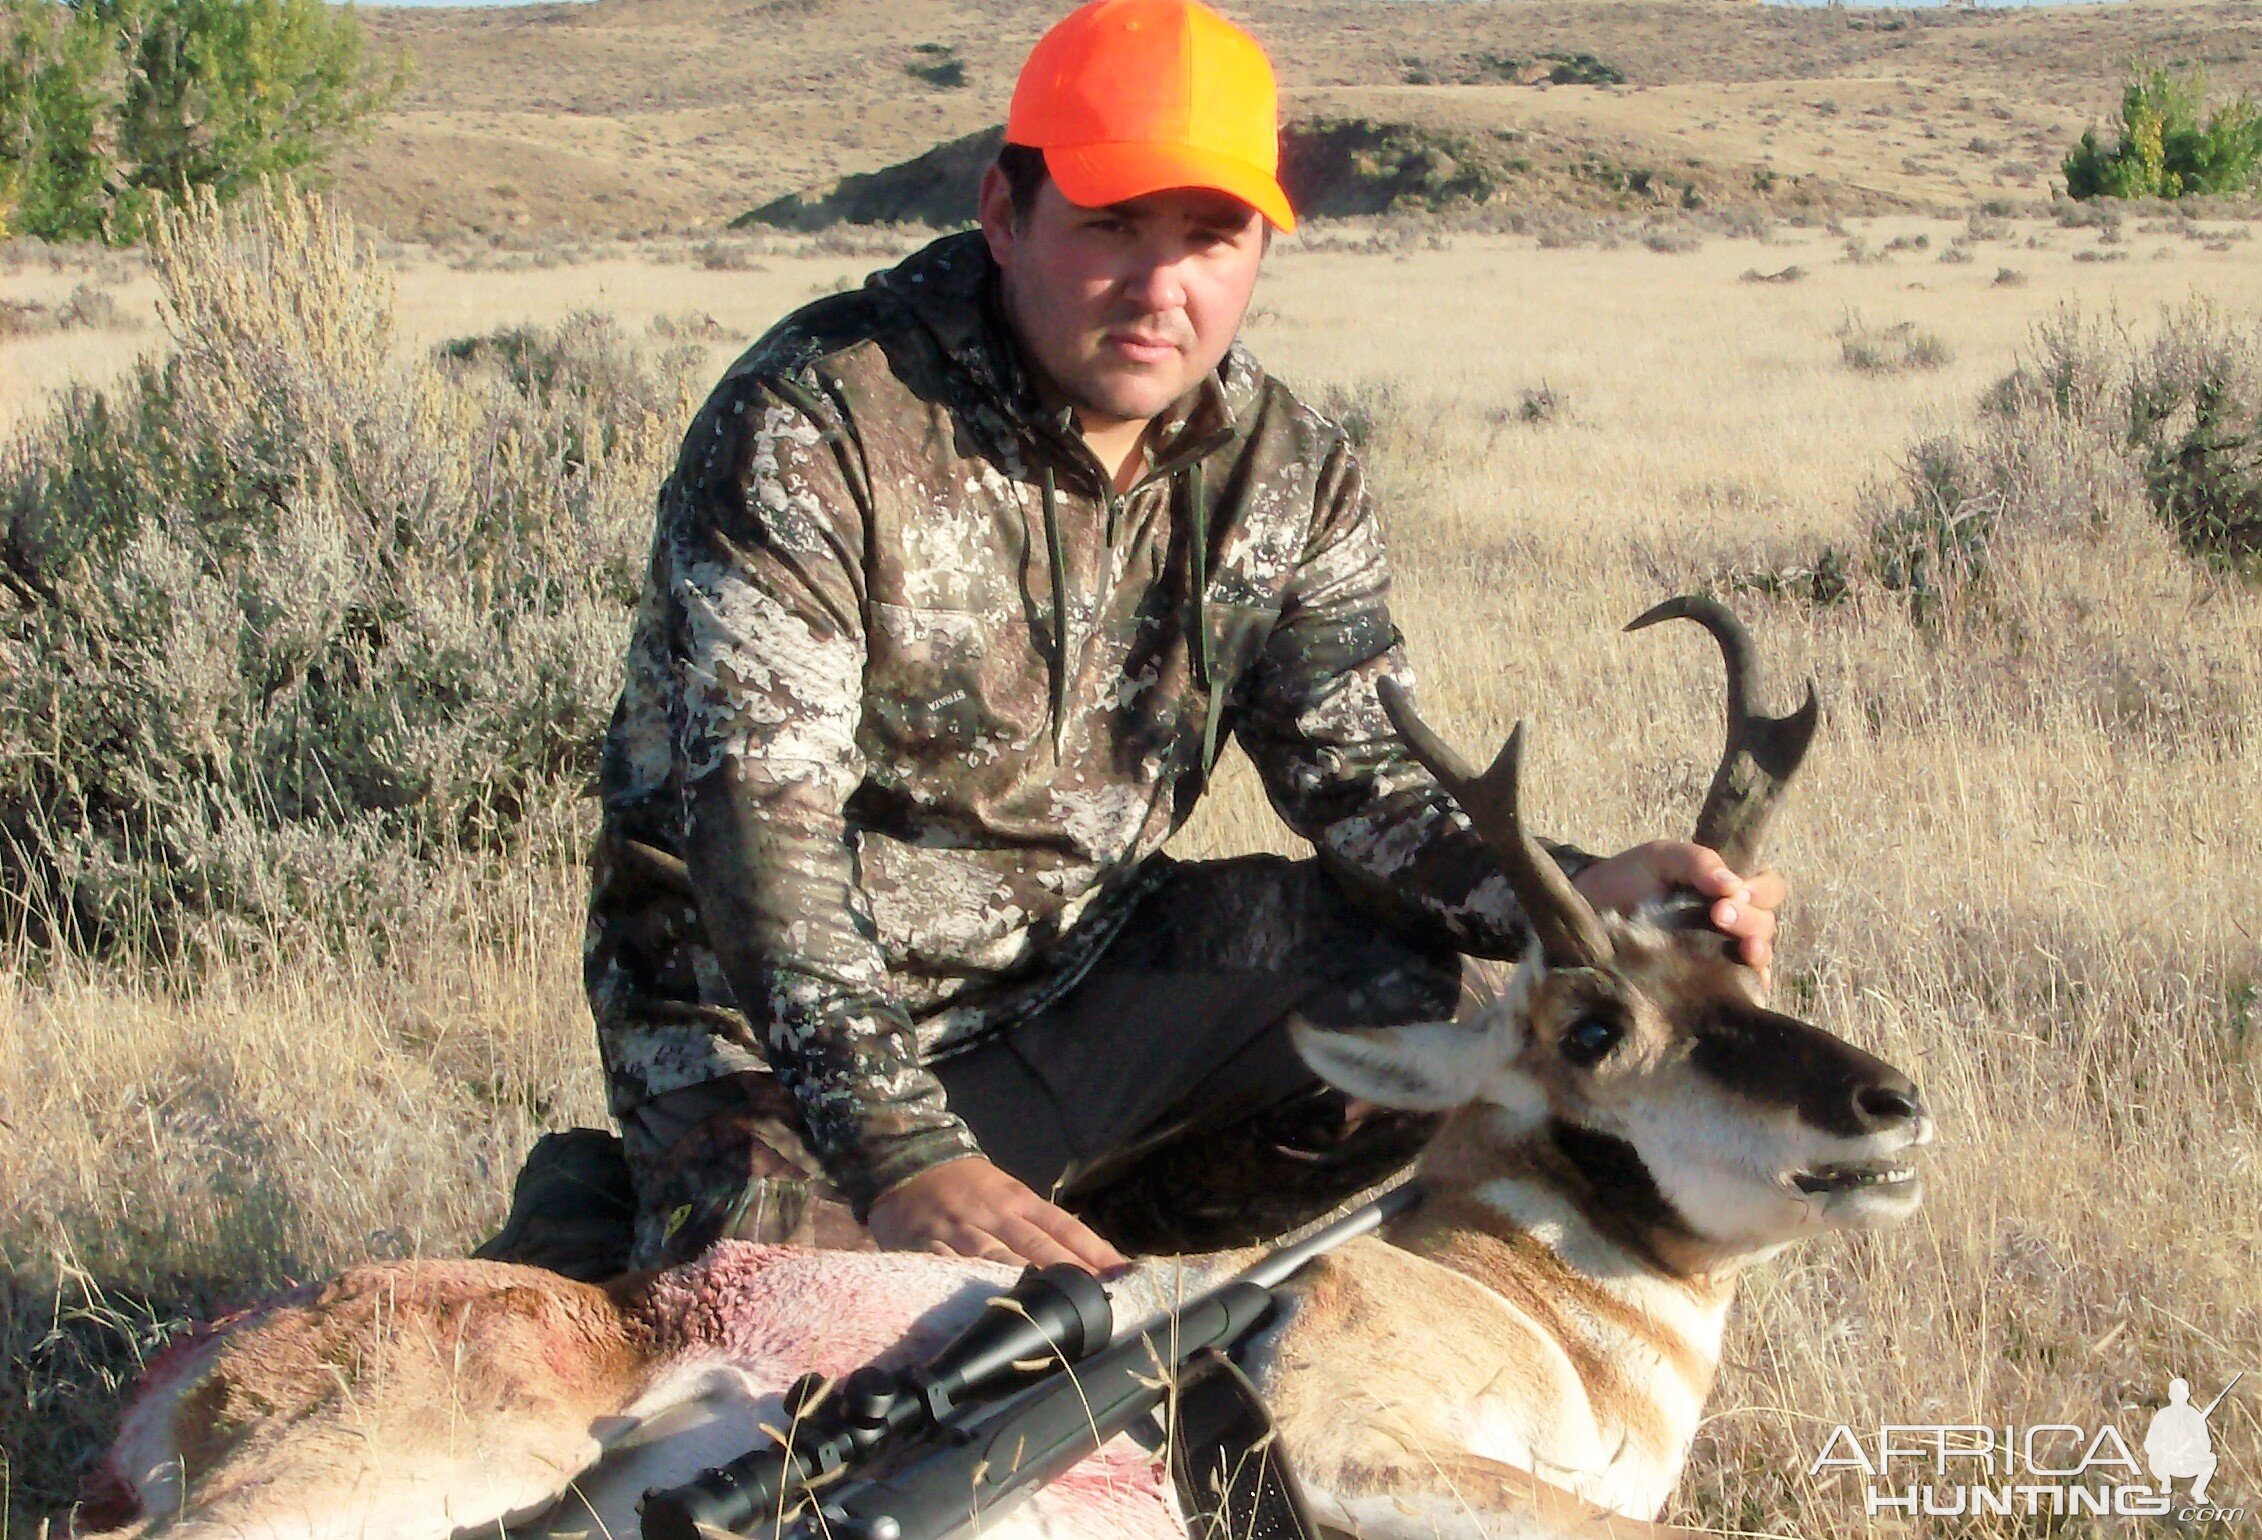 Pronghorn Hunt Wyoming USA